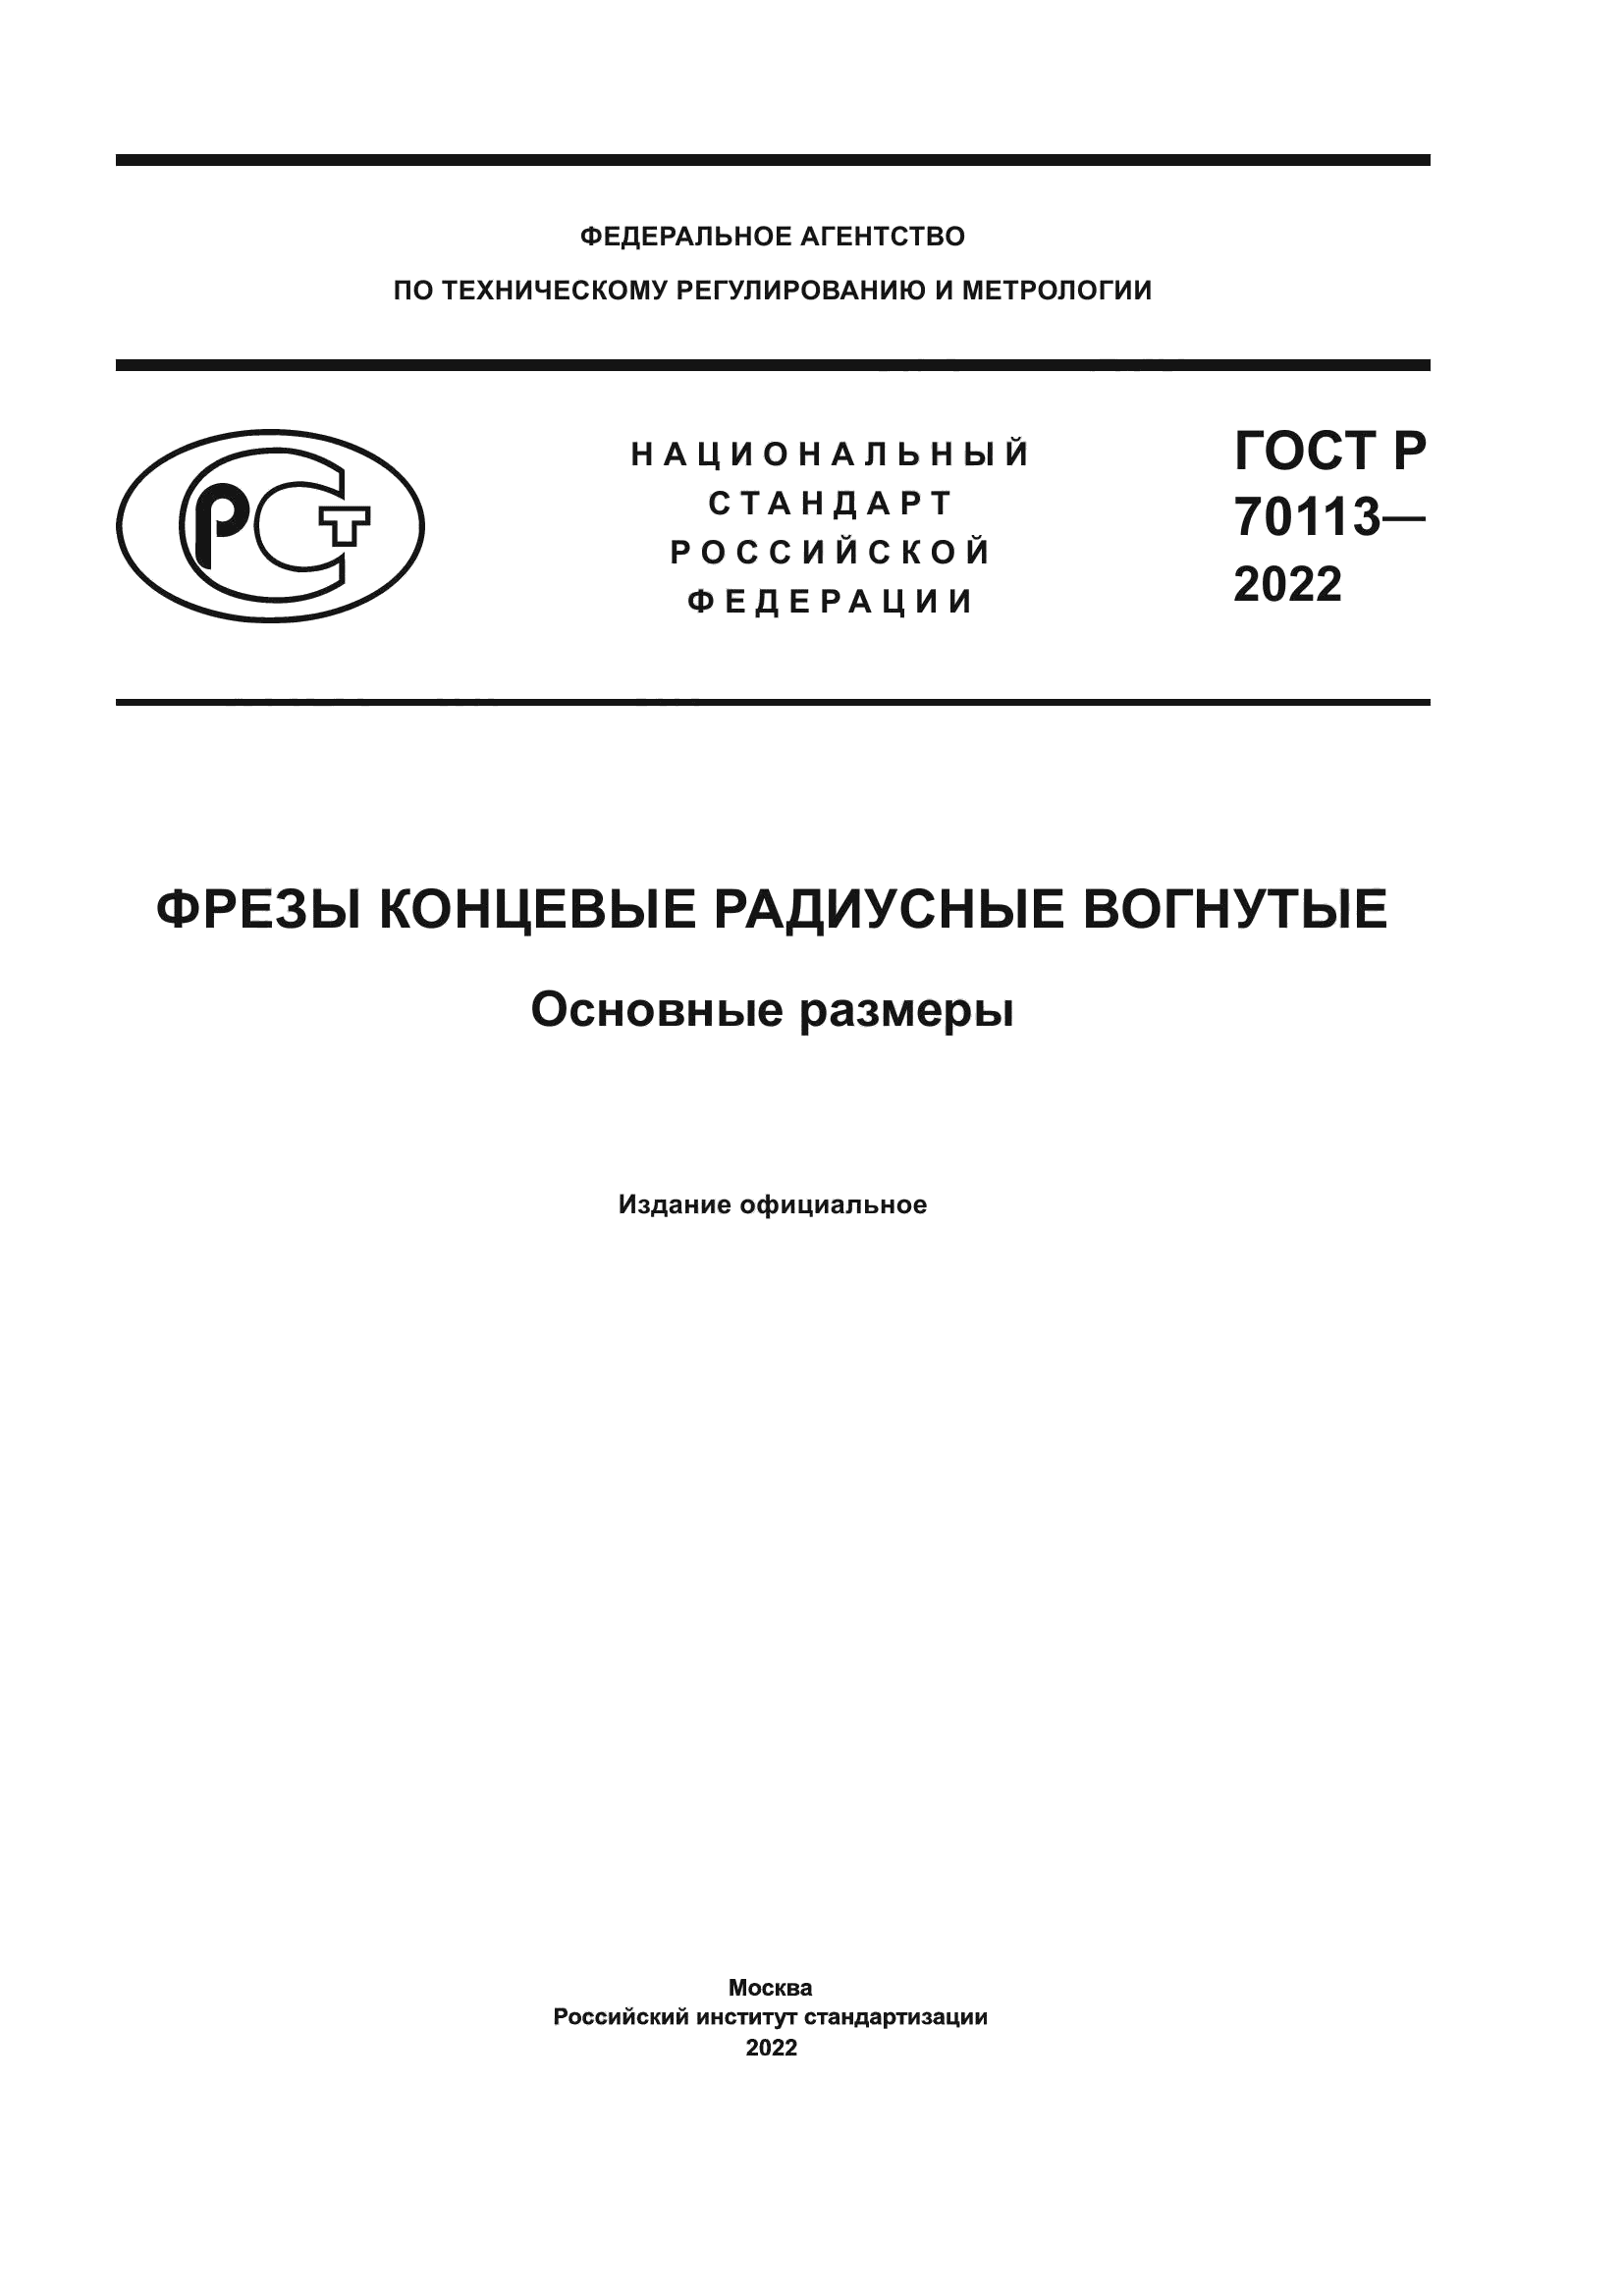 ГОСТ Р 70113-2022